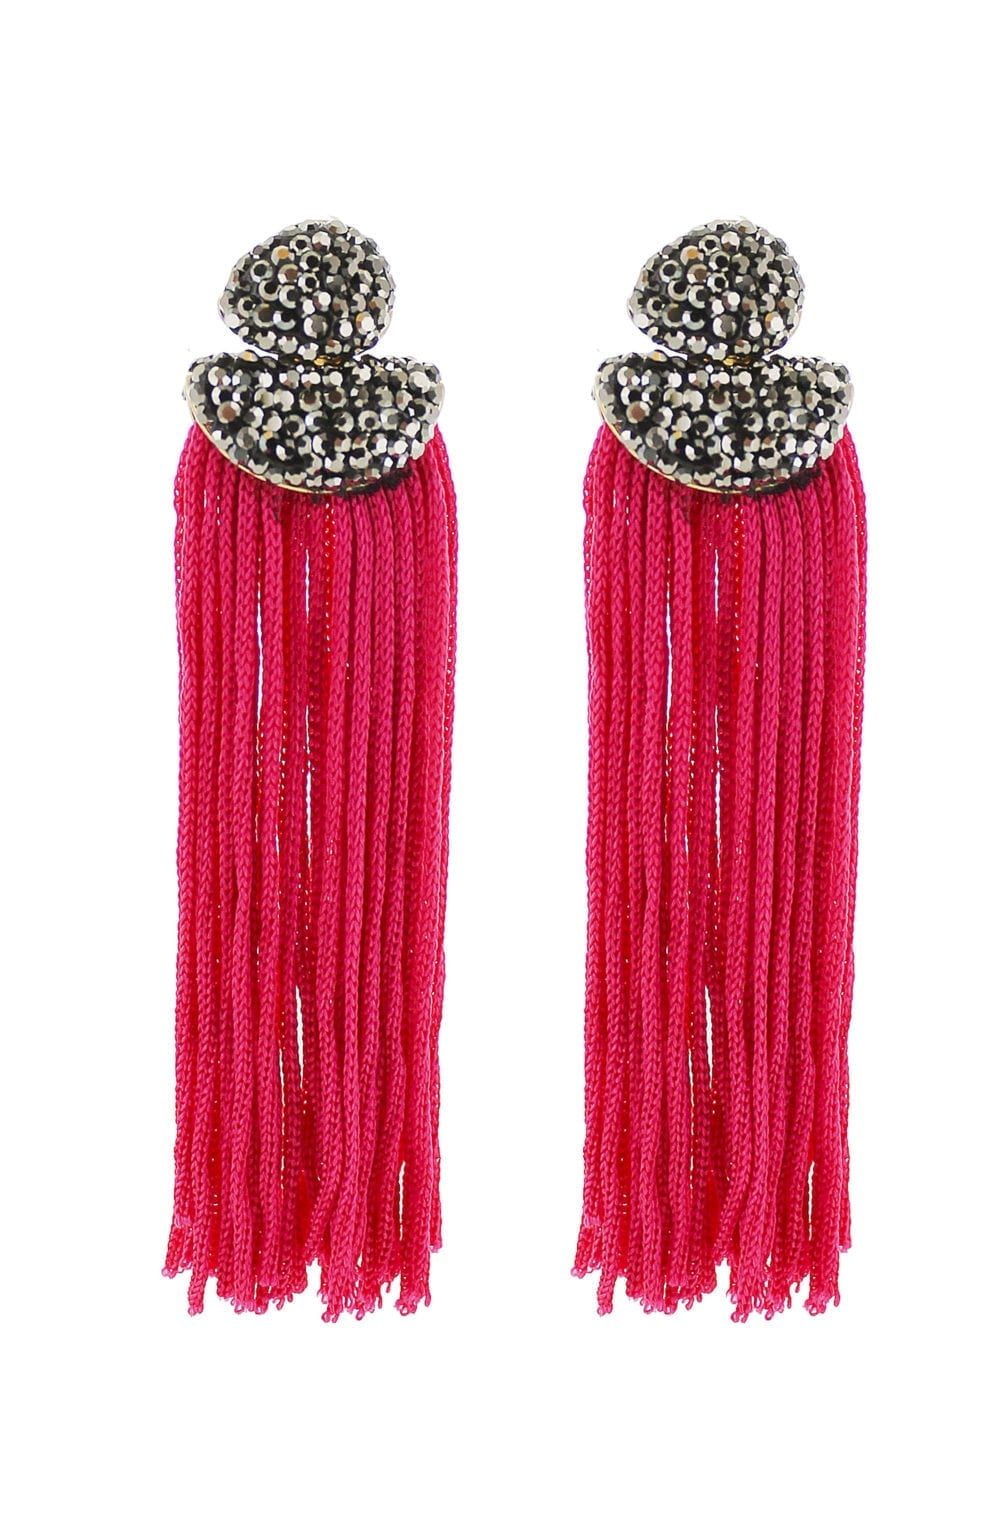 Luxe Hot Pink Nylon Fringe Statement Earrings - Panacea Jewelry | Panacea